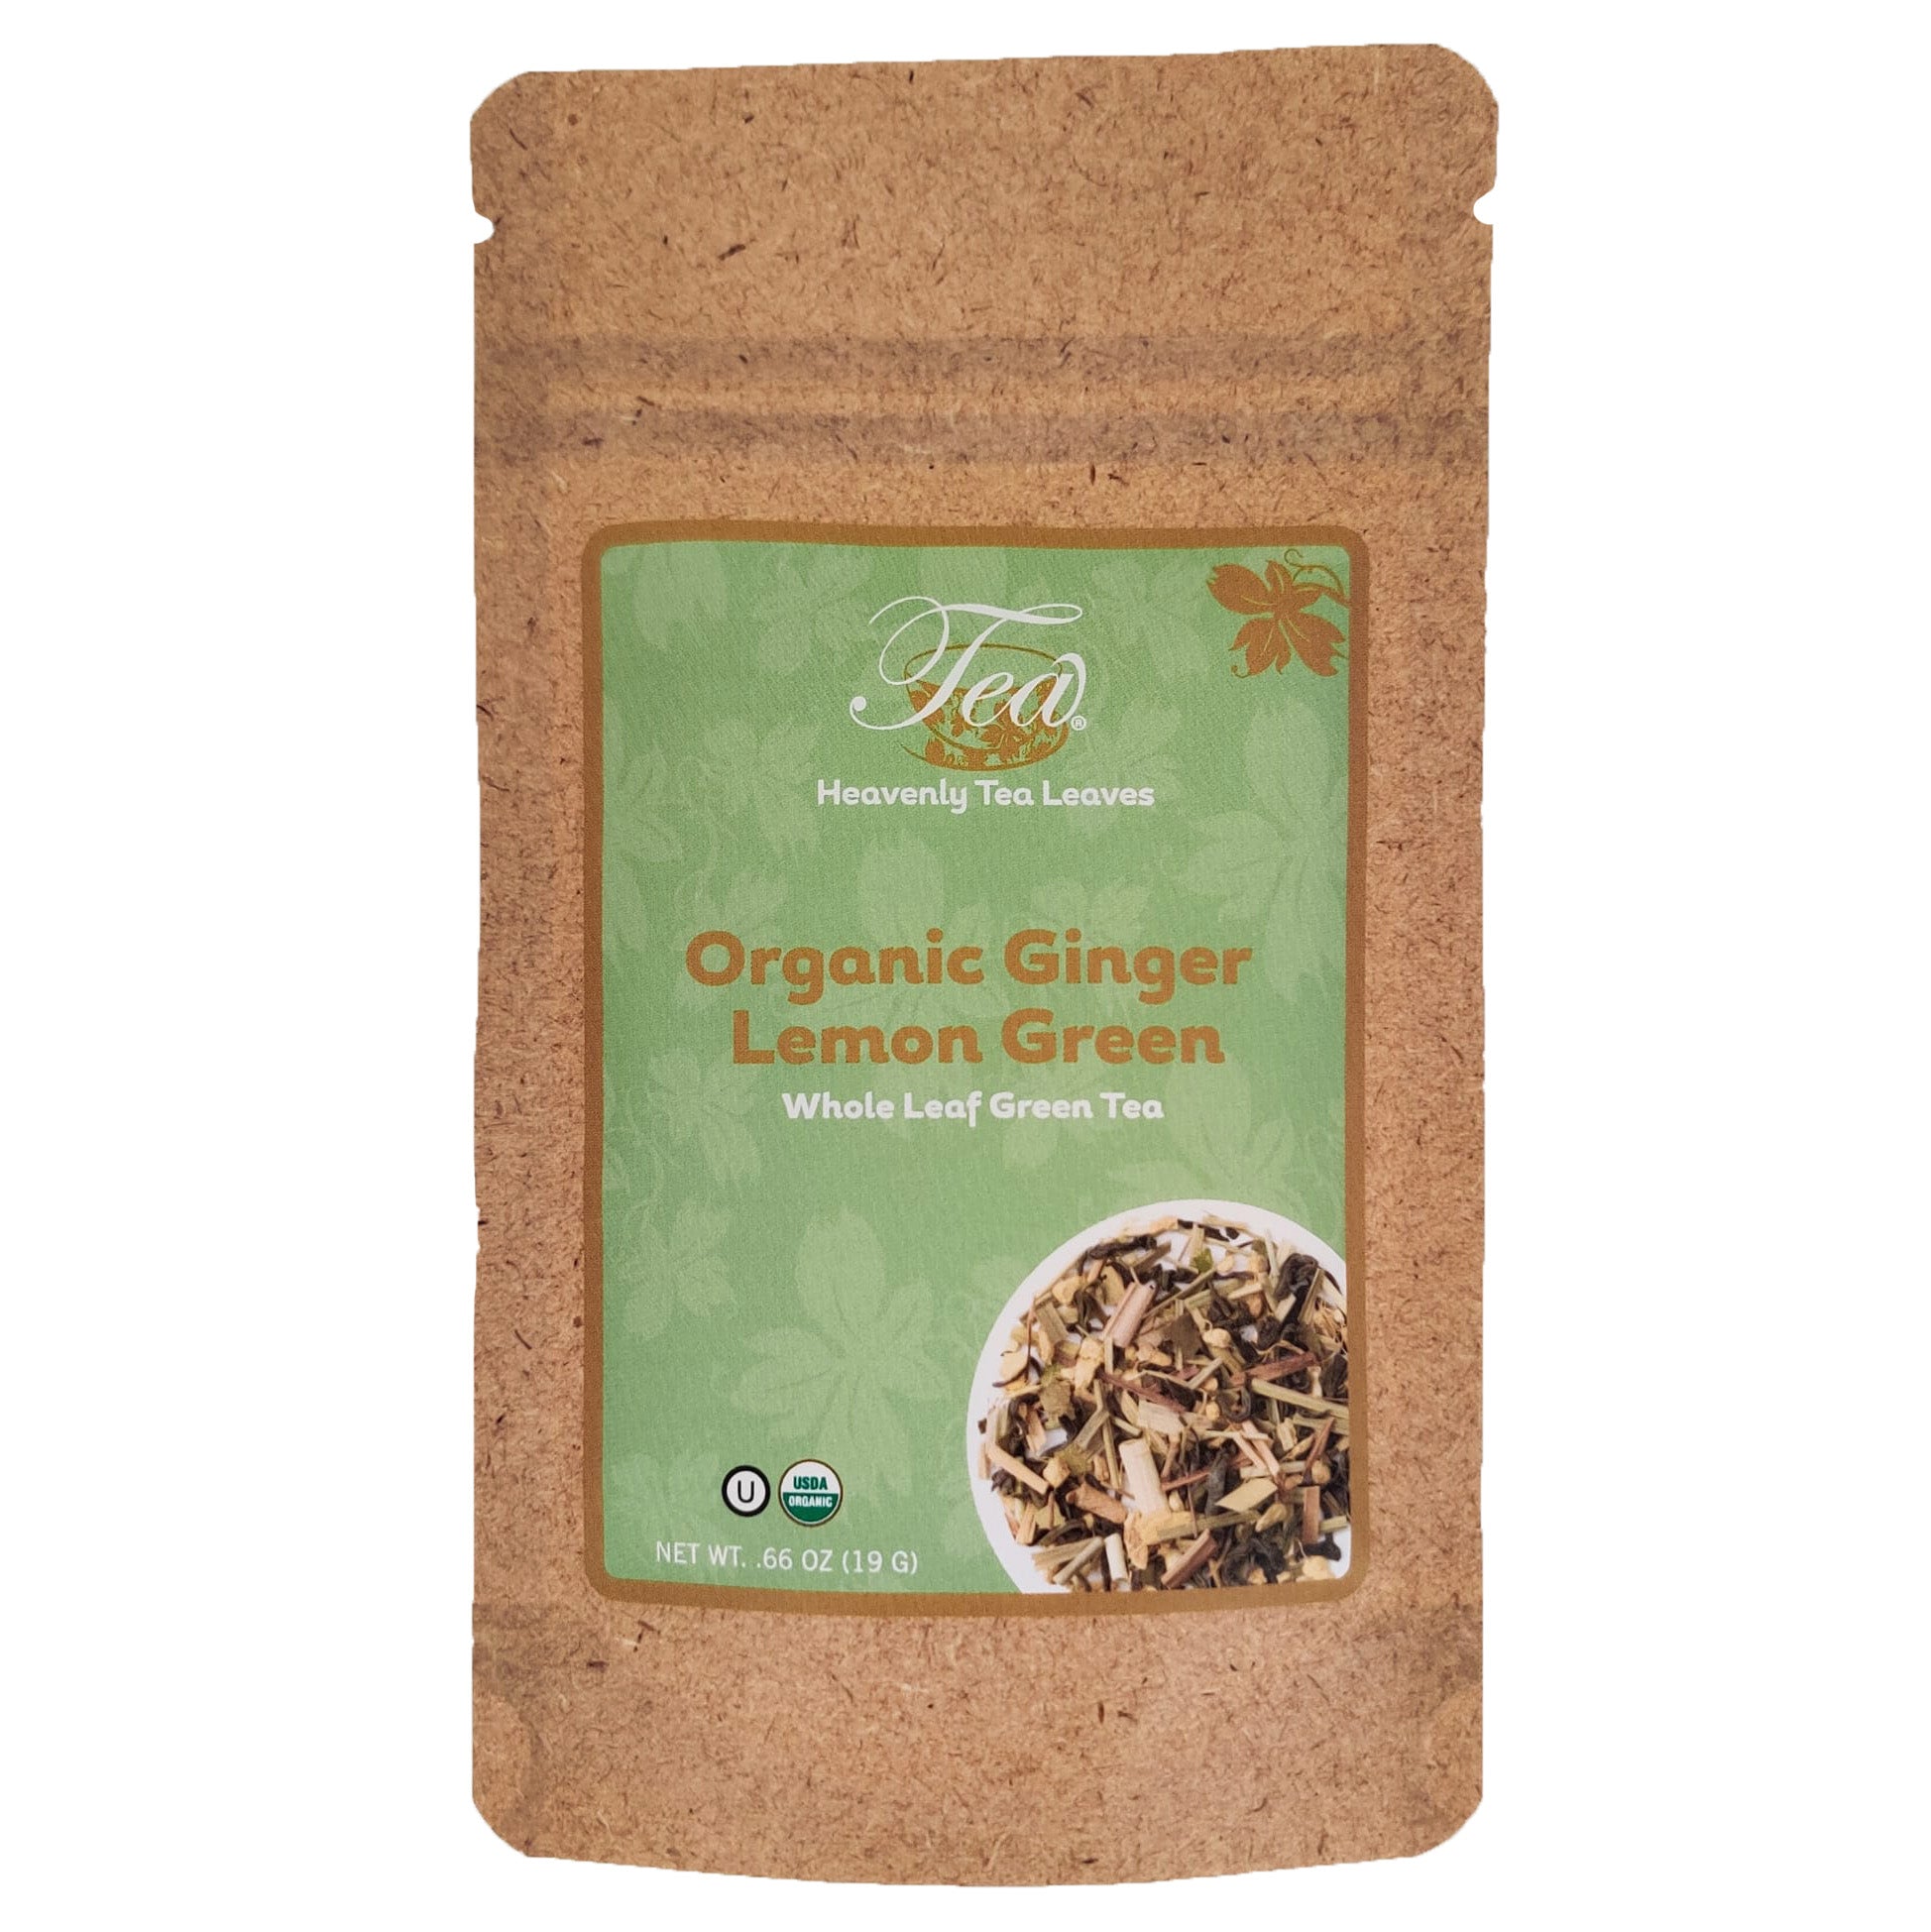 Organic Ginger Lemon Green, Essentials Collection, .66 Oz. - USDA Organic & OU Kosher - Compostable Packaging - Premium Loose Leaf Green Tea - Heavenly Tea Leaves